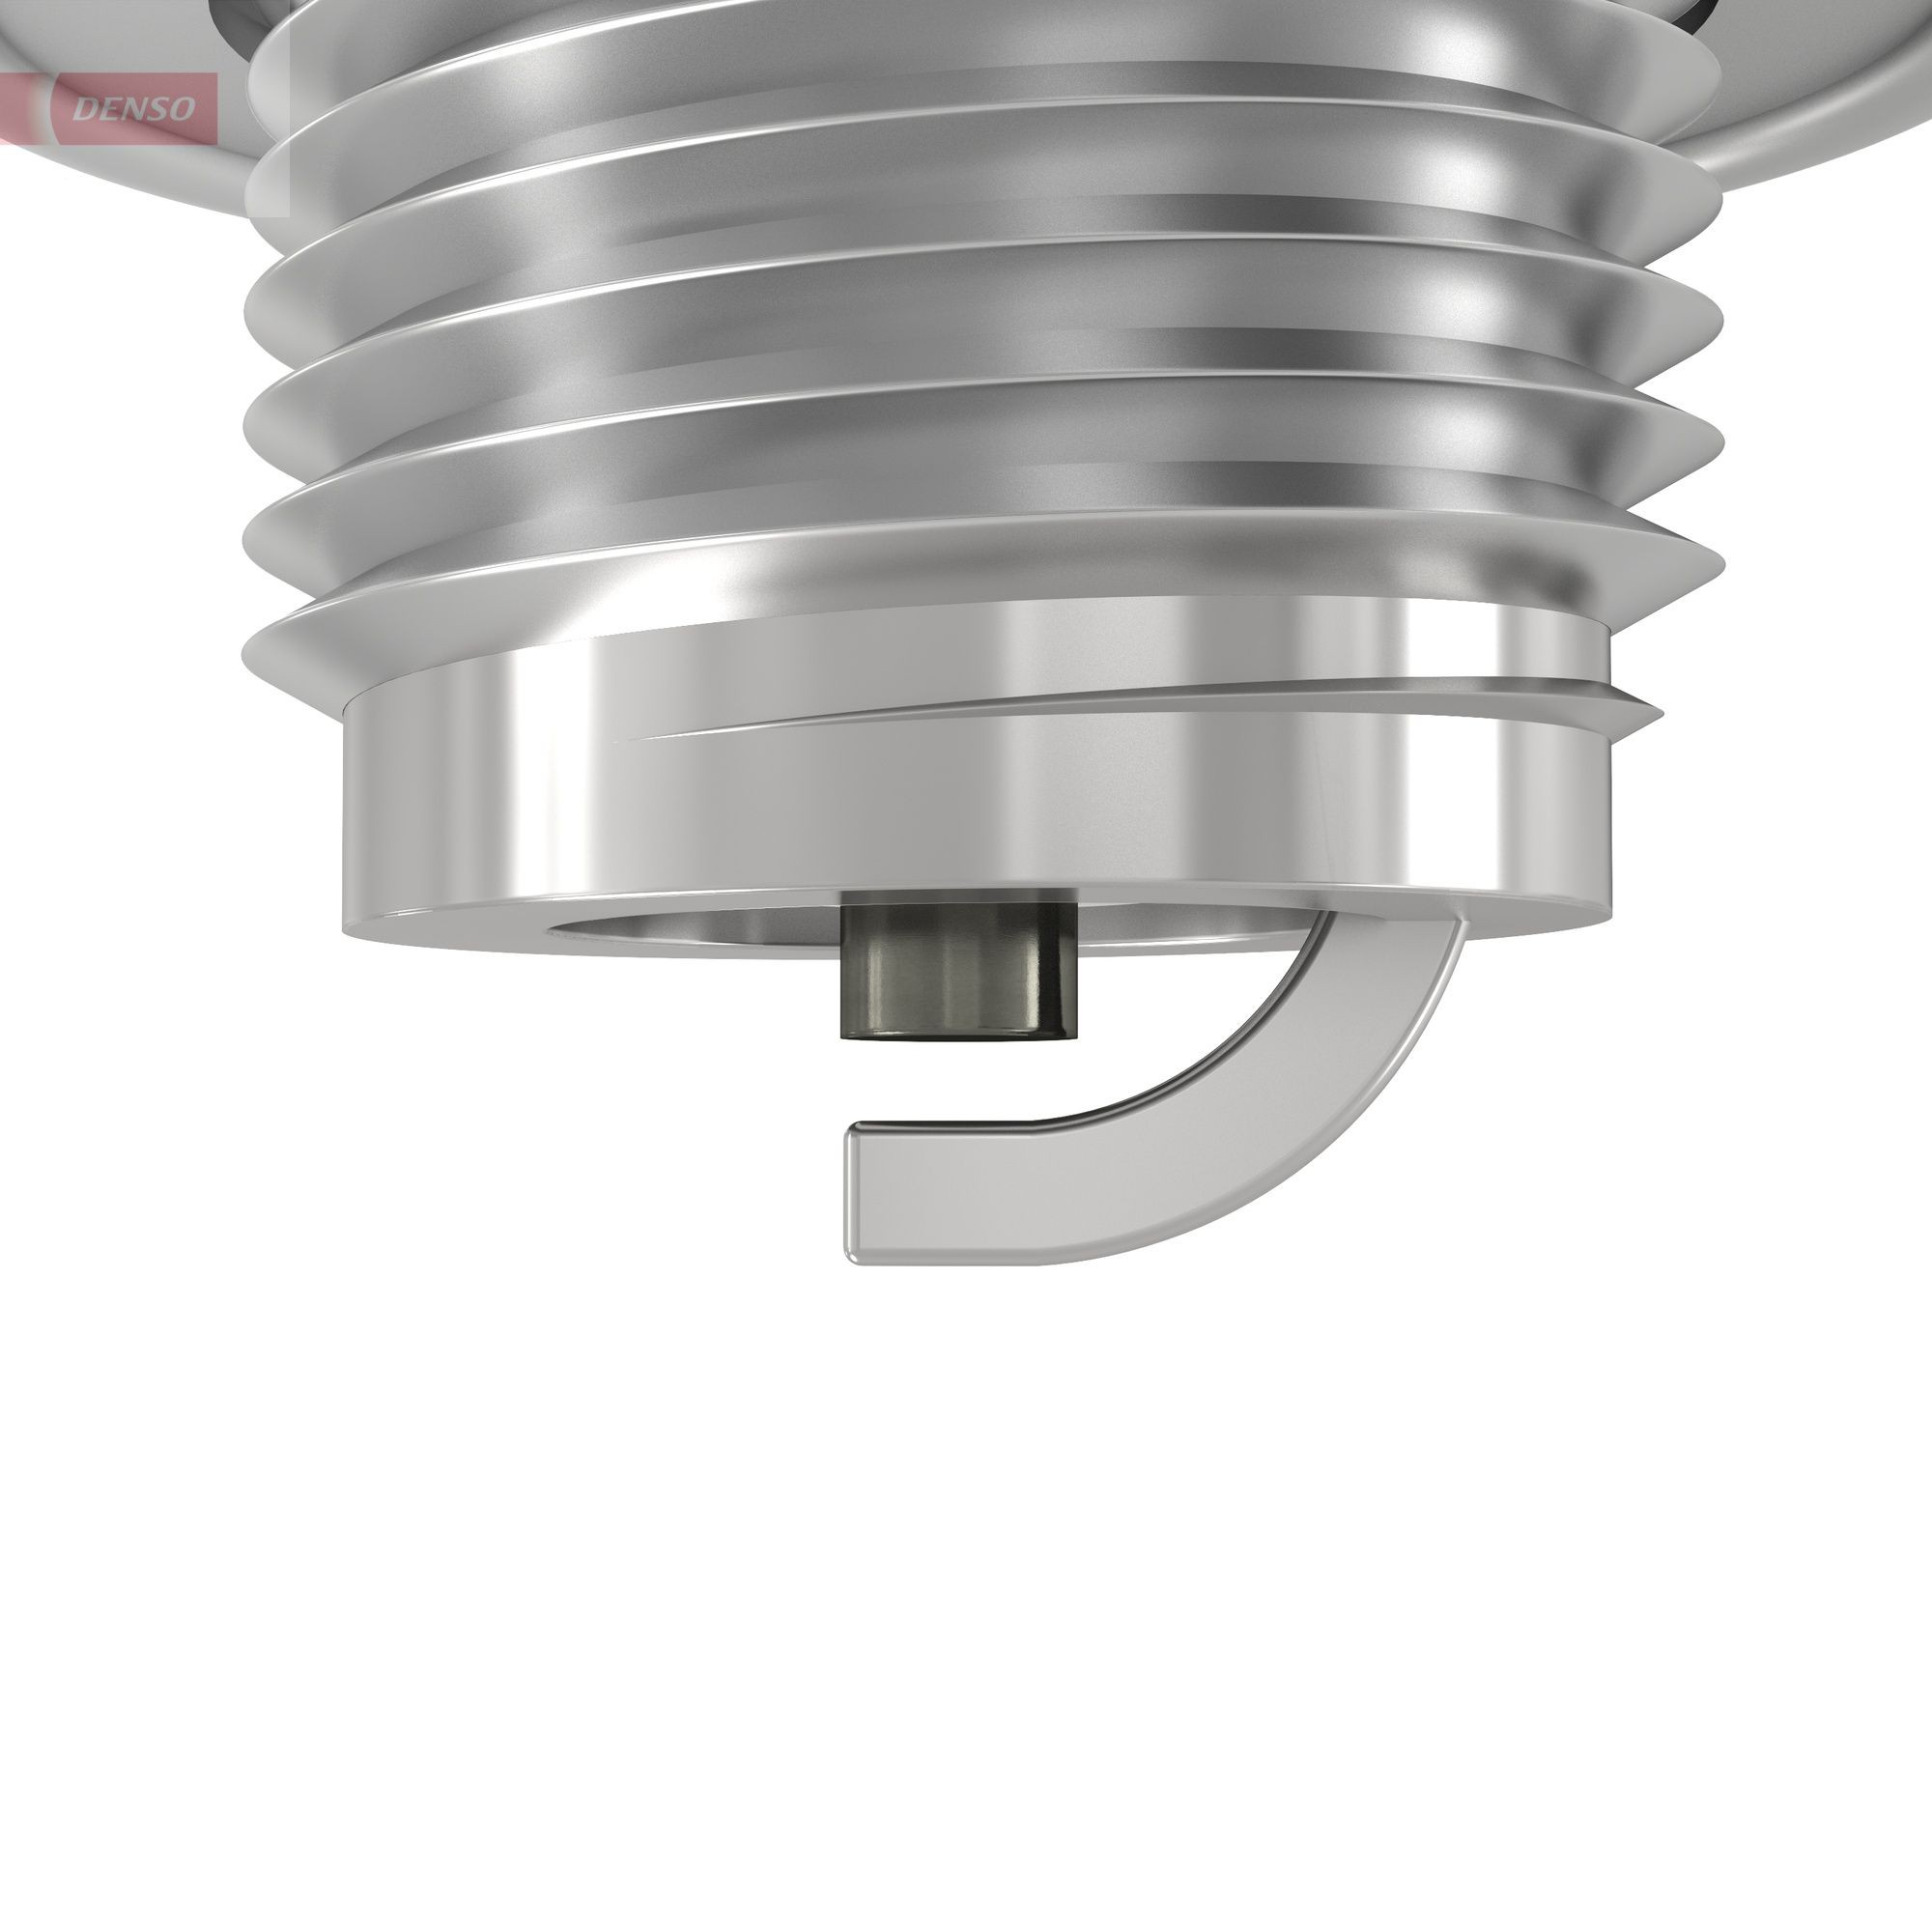 DENSO Nickel M24S Spark plug Spanner Size: 25.4